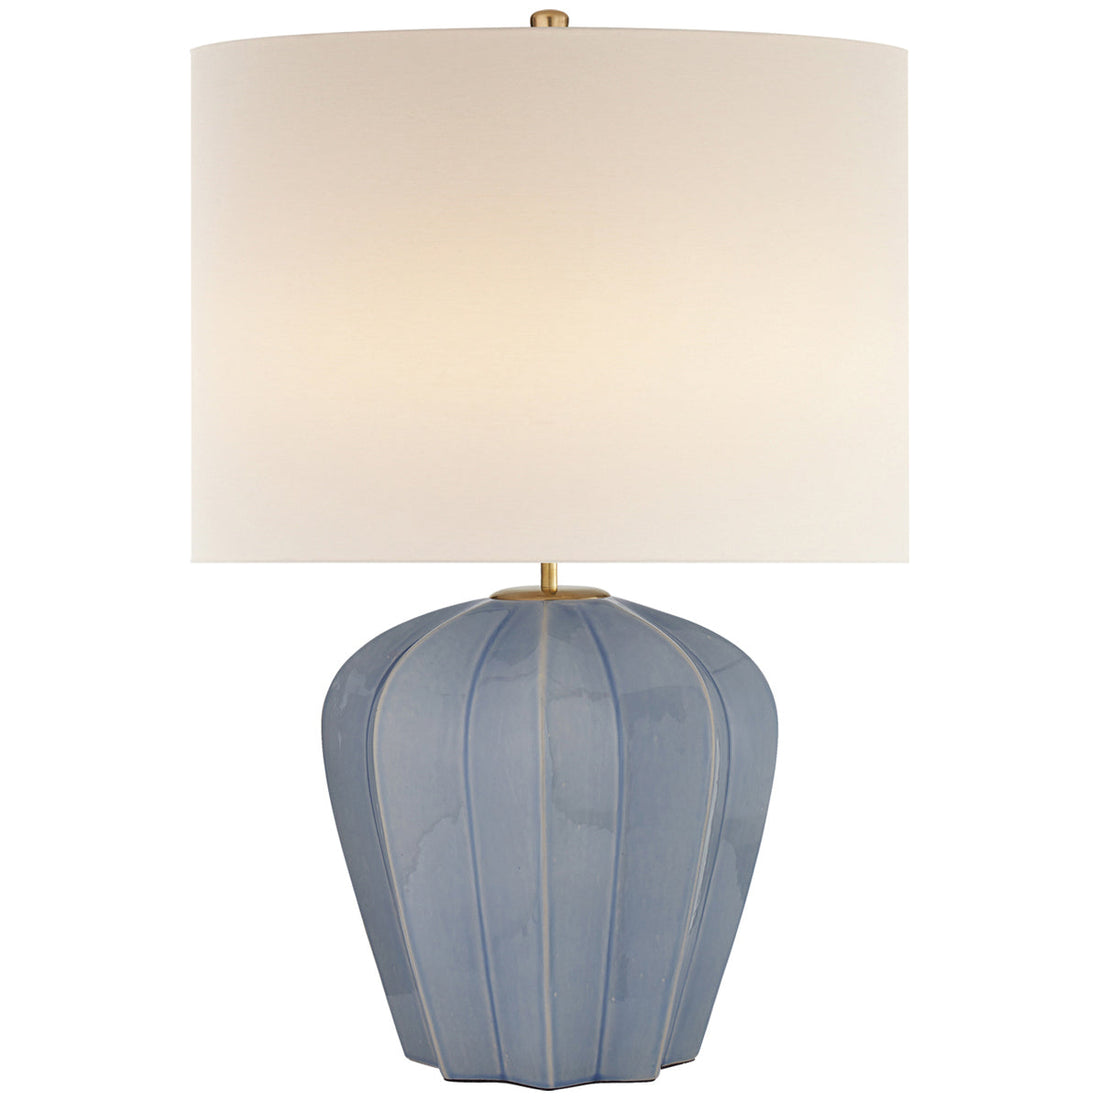 Visual Comfort Pierrepont Medium Table Lamp